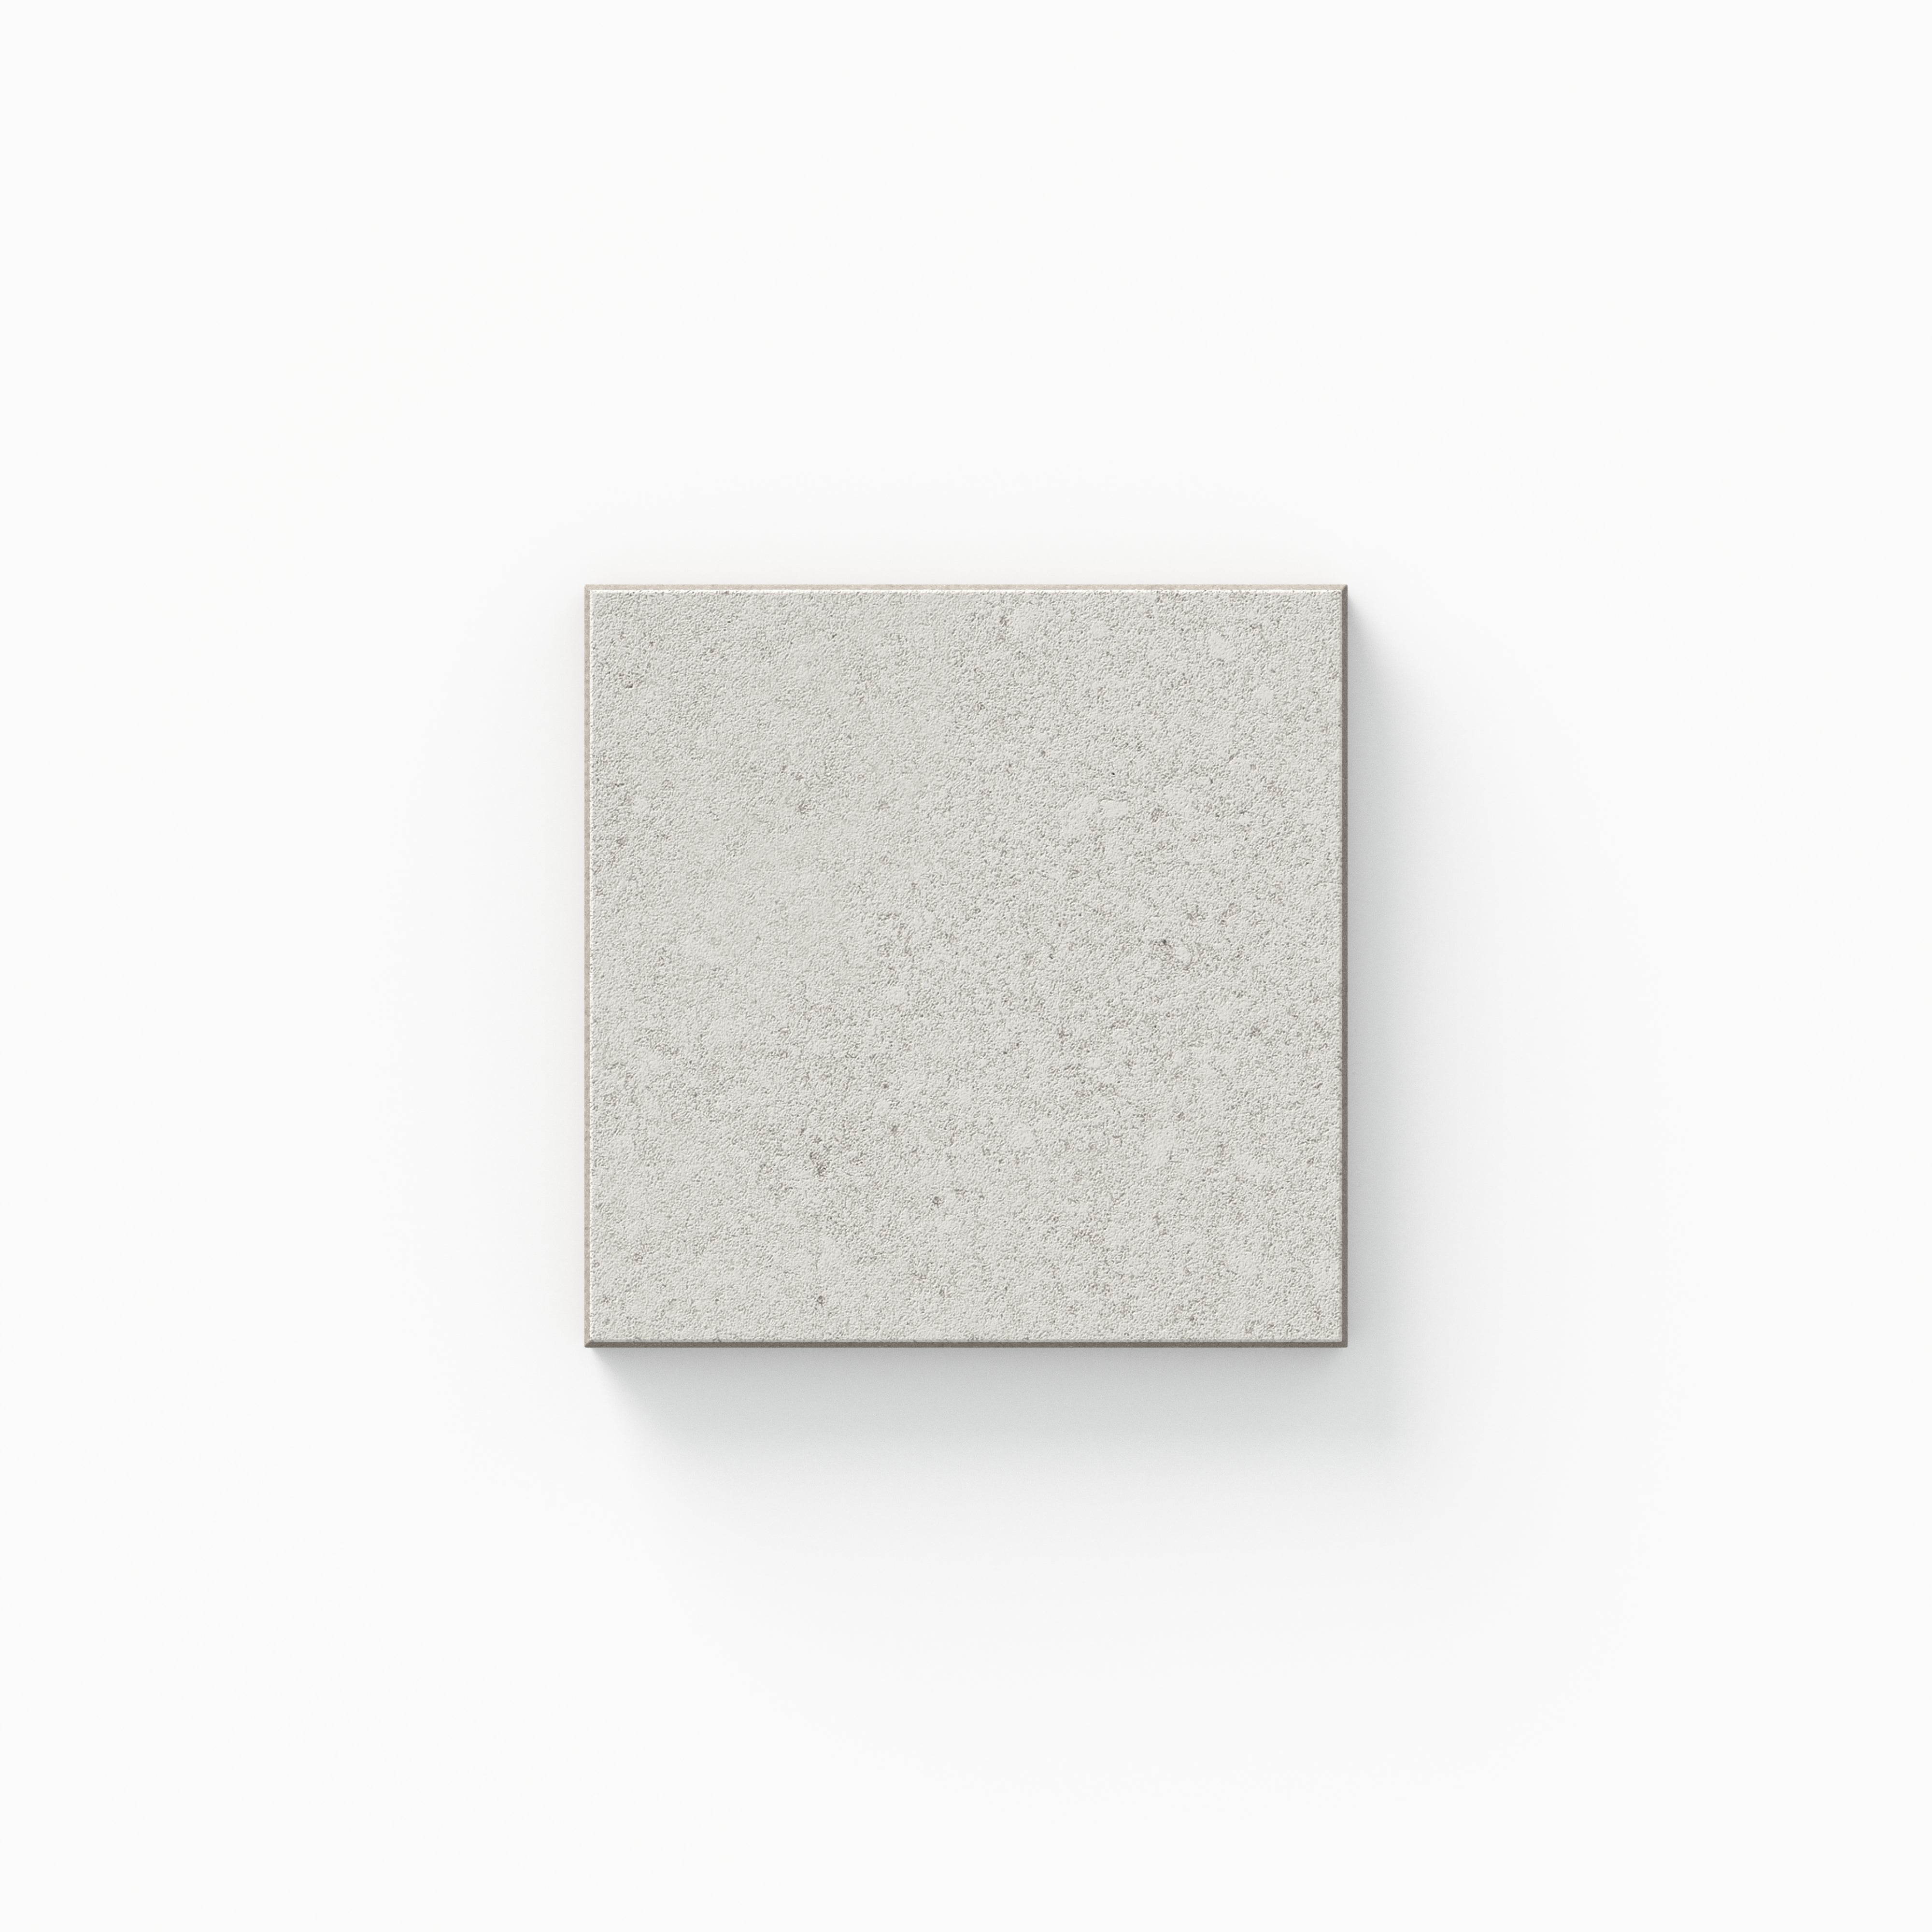 Shea Matte Sand 4x4 Tile Sample